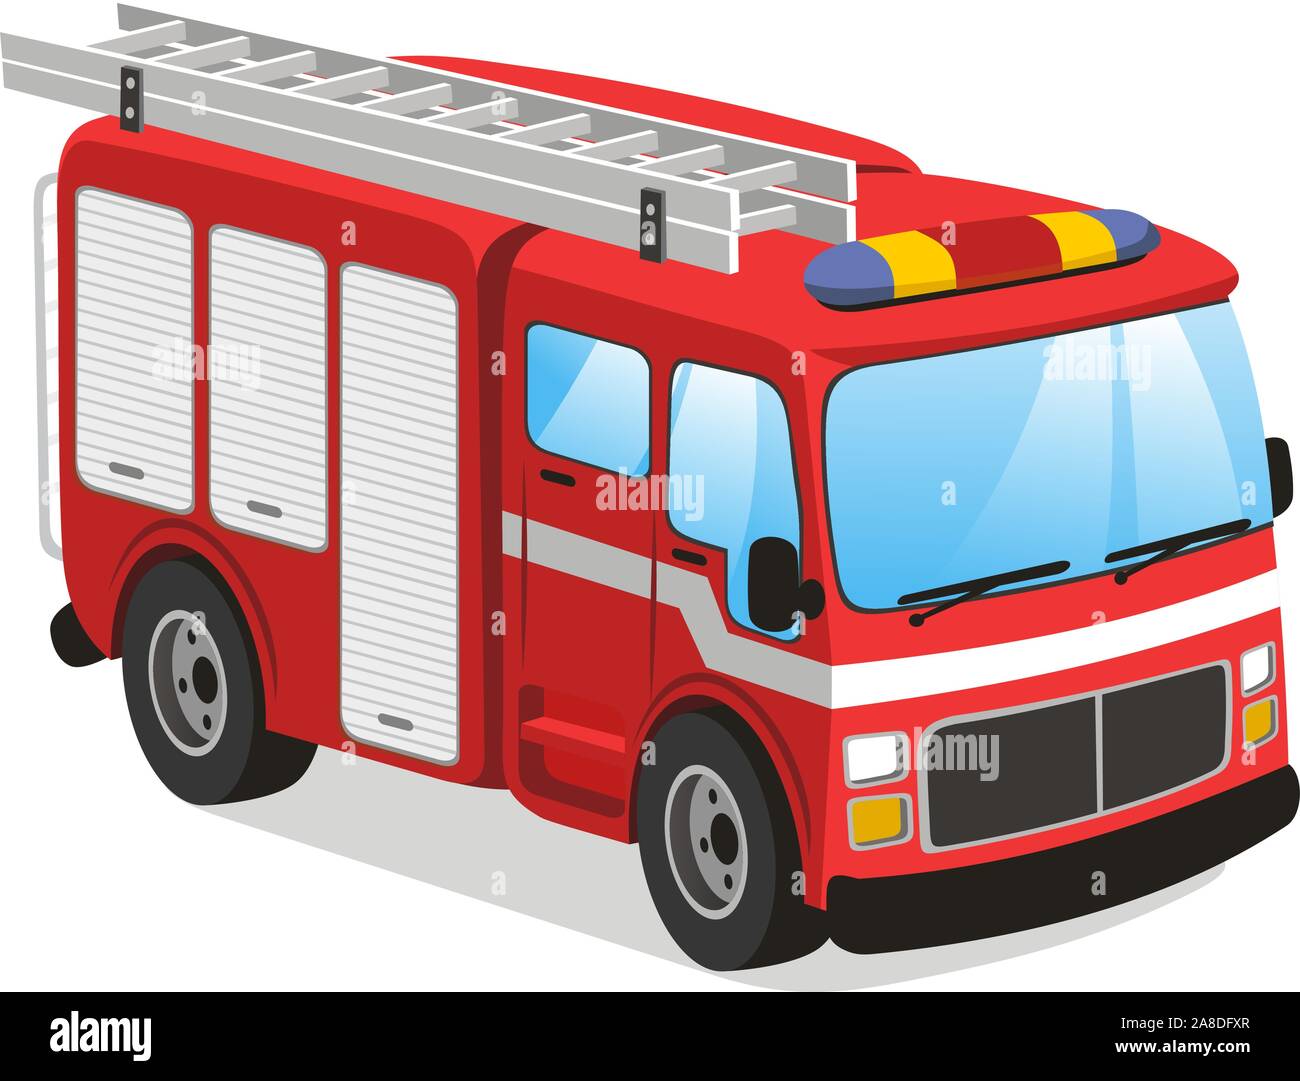 Fire truck cartoon illustration Stock Vector